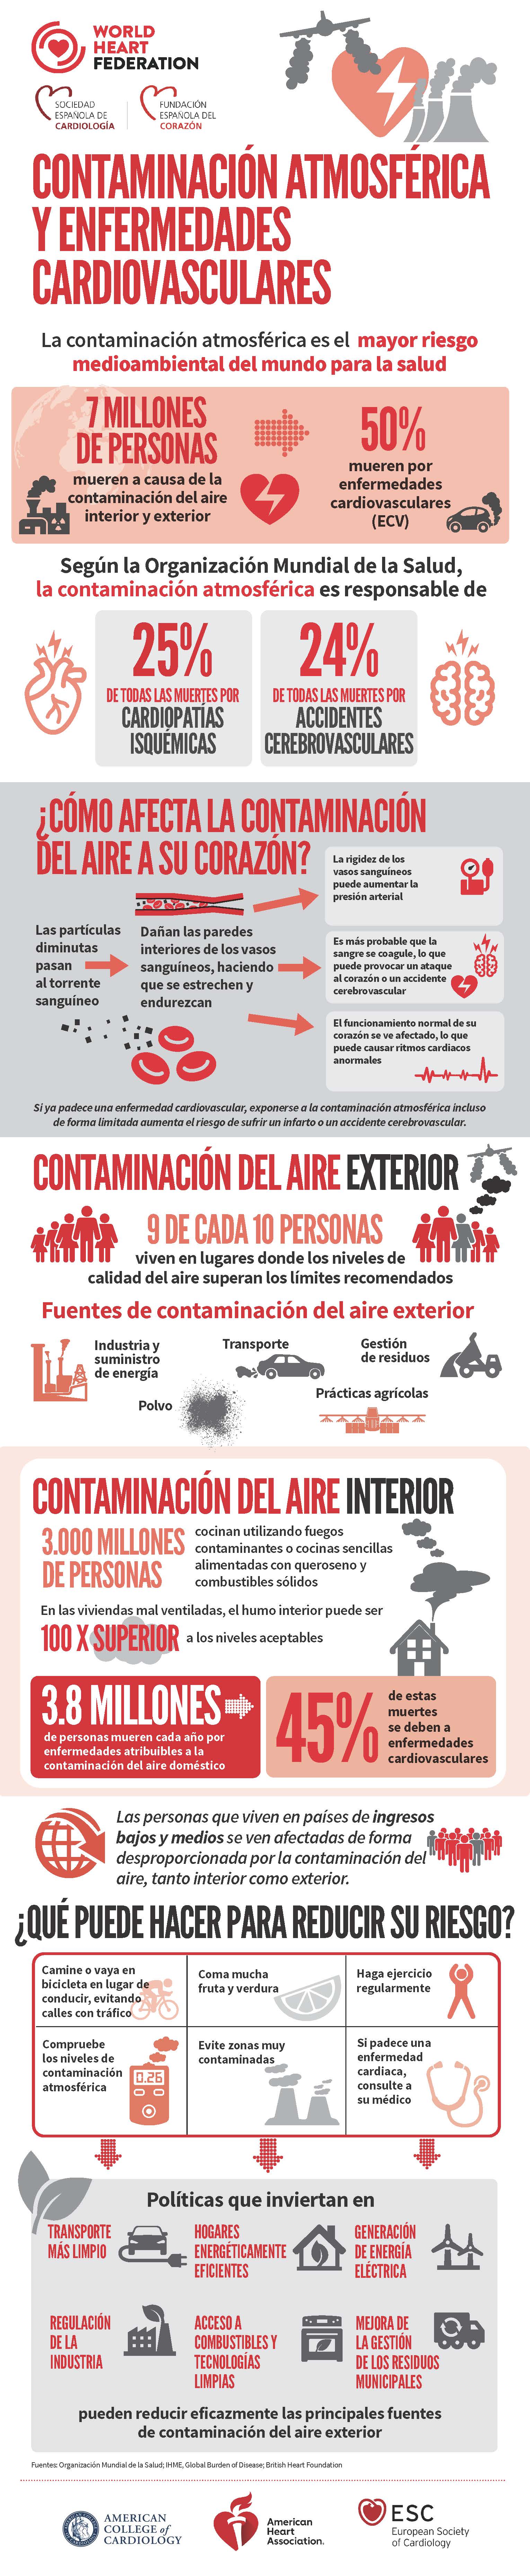 WHF AIR POLLUTION CARDIOVASCULAR DISEASE Infographic SPANISH